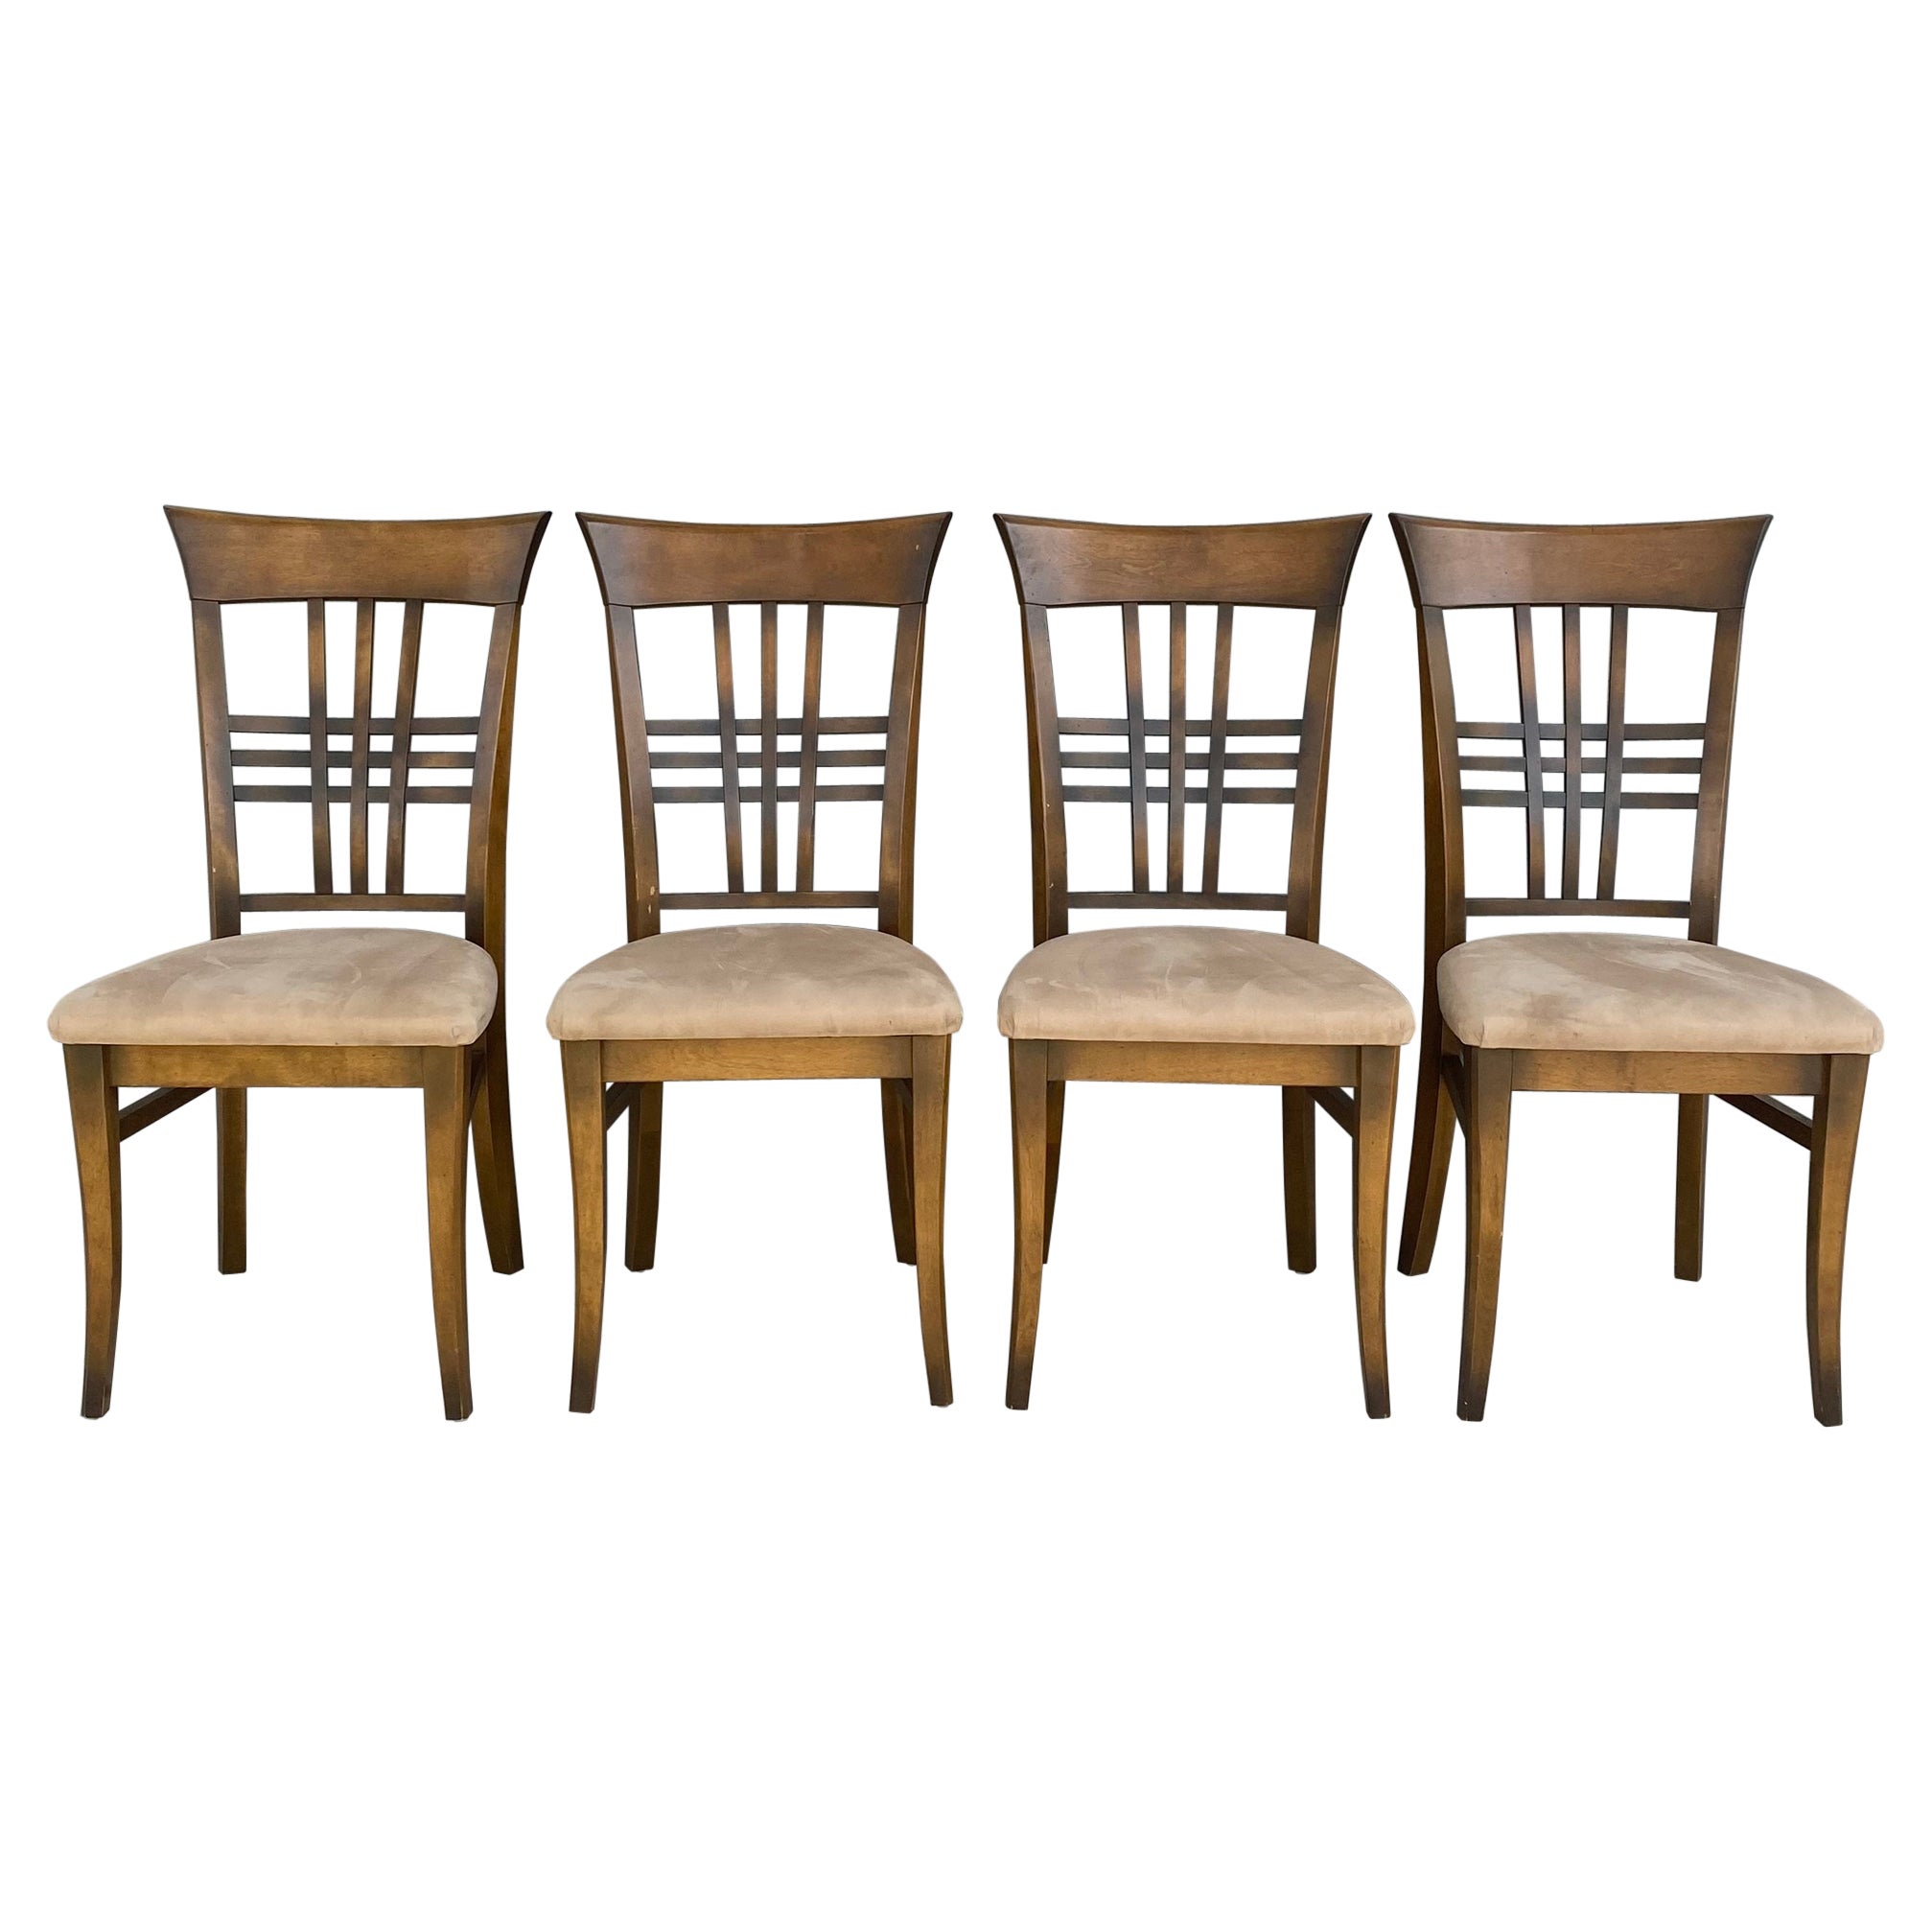 Thomasville Slat Back Oak Dining Chairs, Set of 4